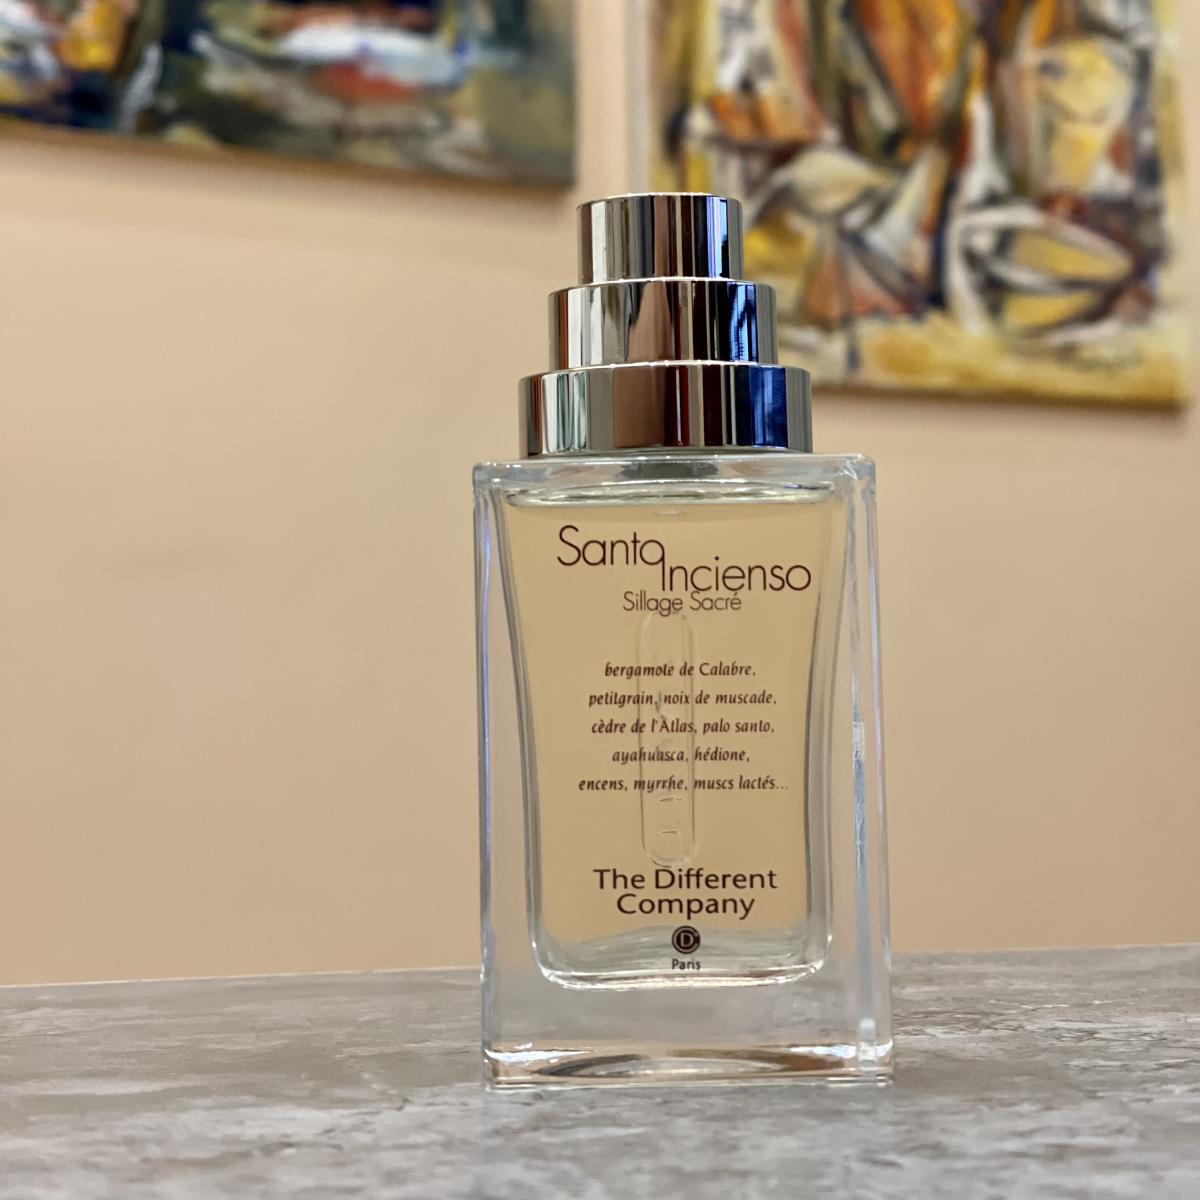 Santo Incienso, Sillage Sacré The Different Company perfume - a